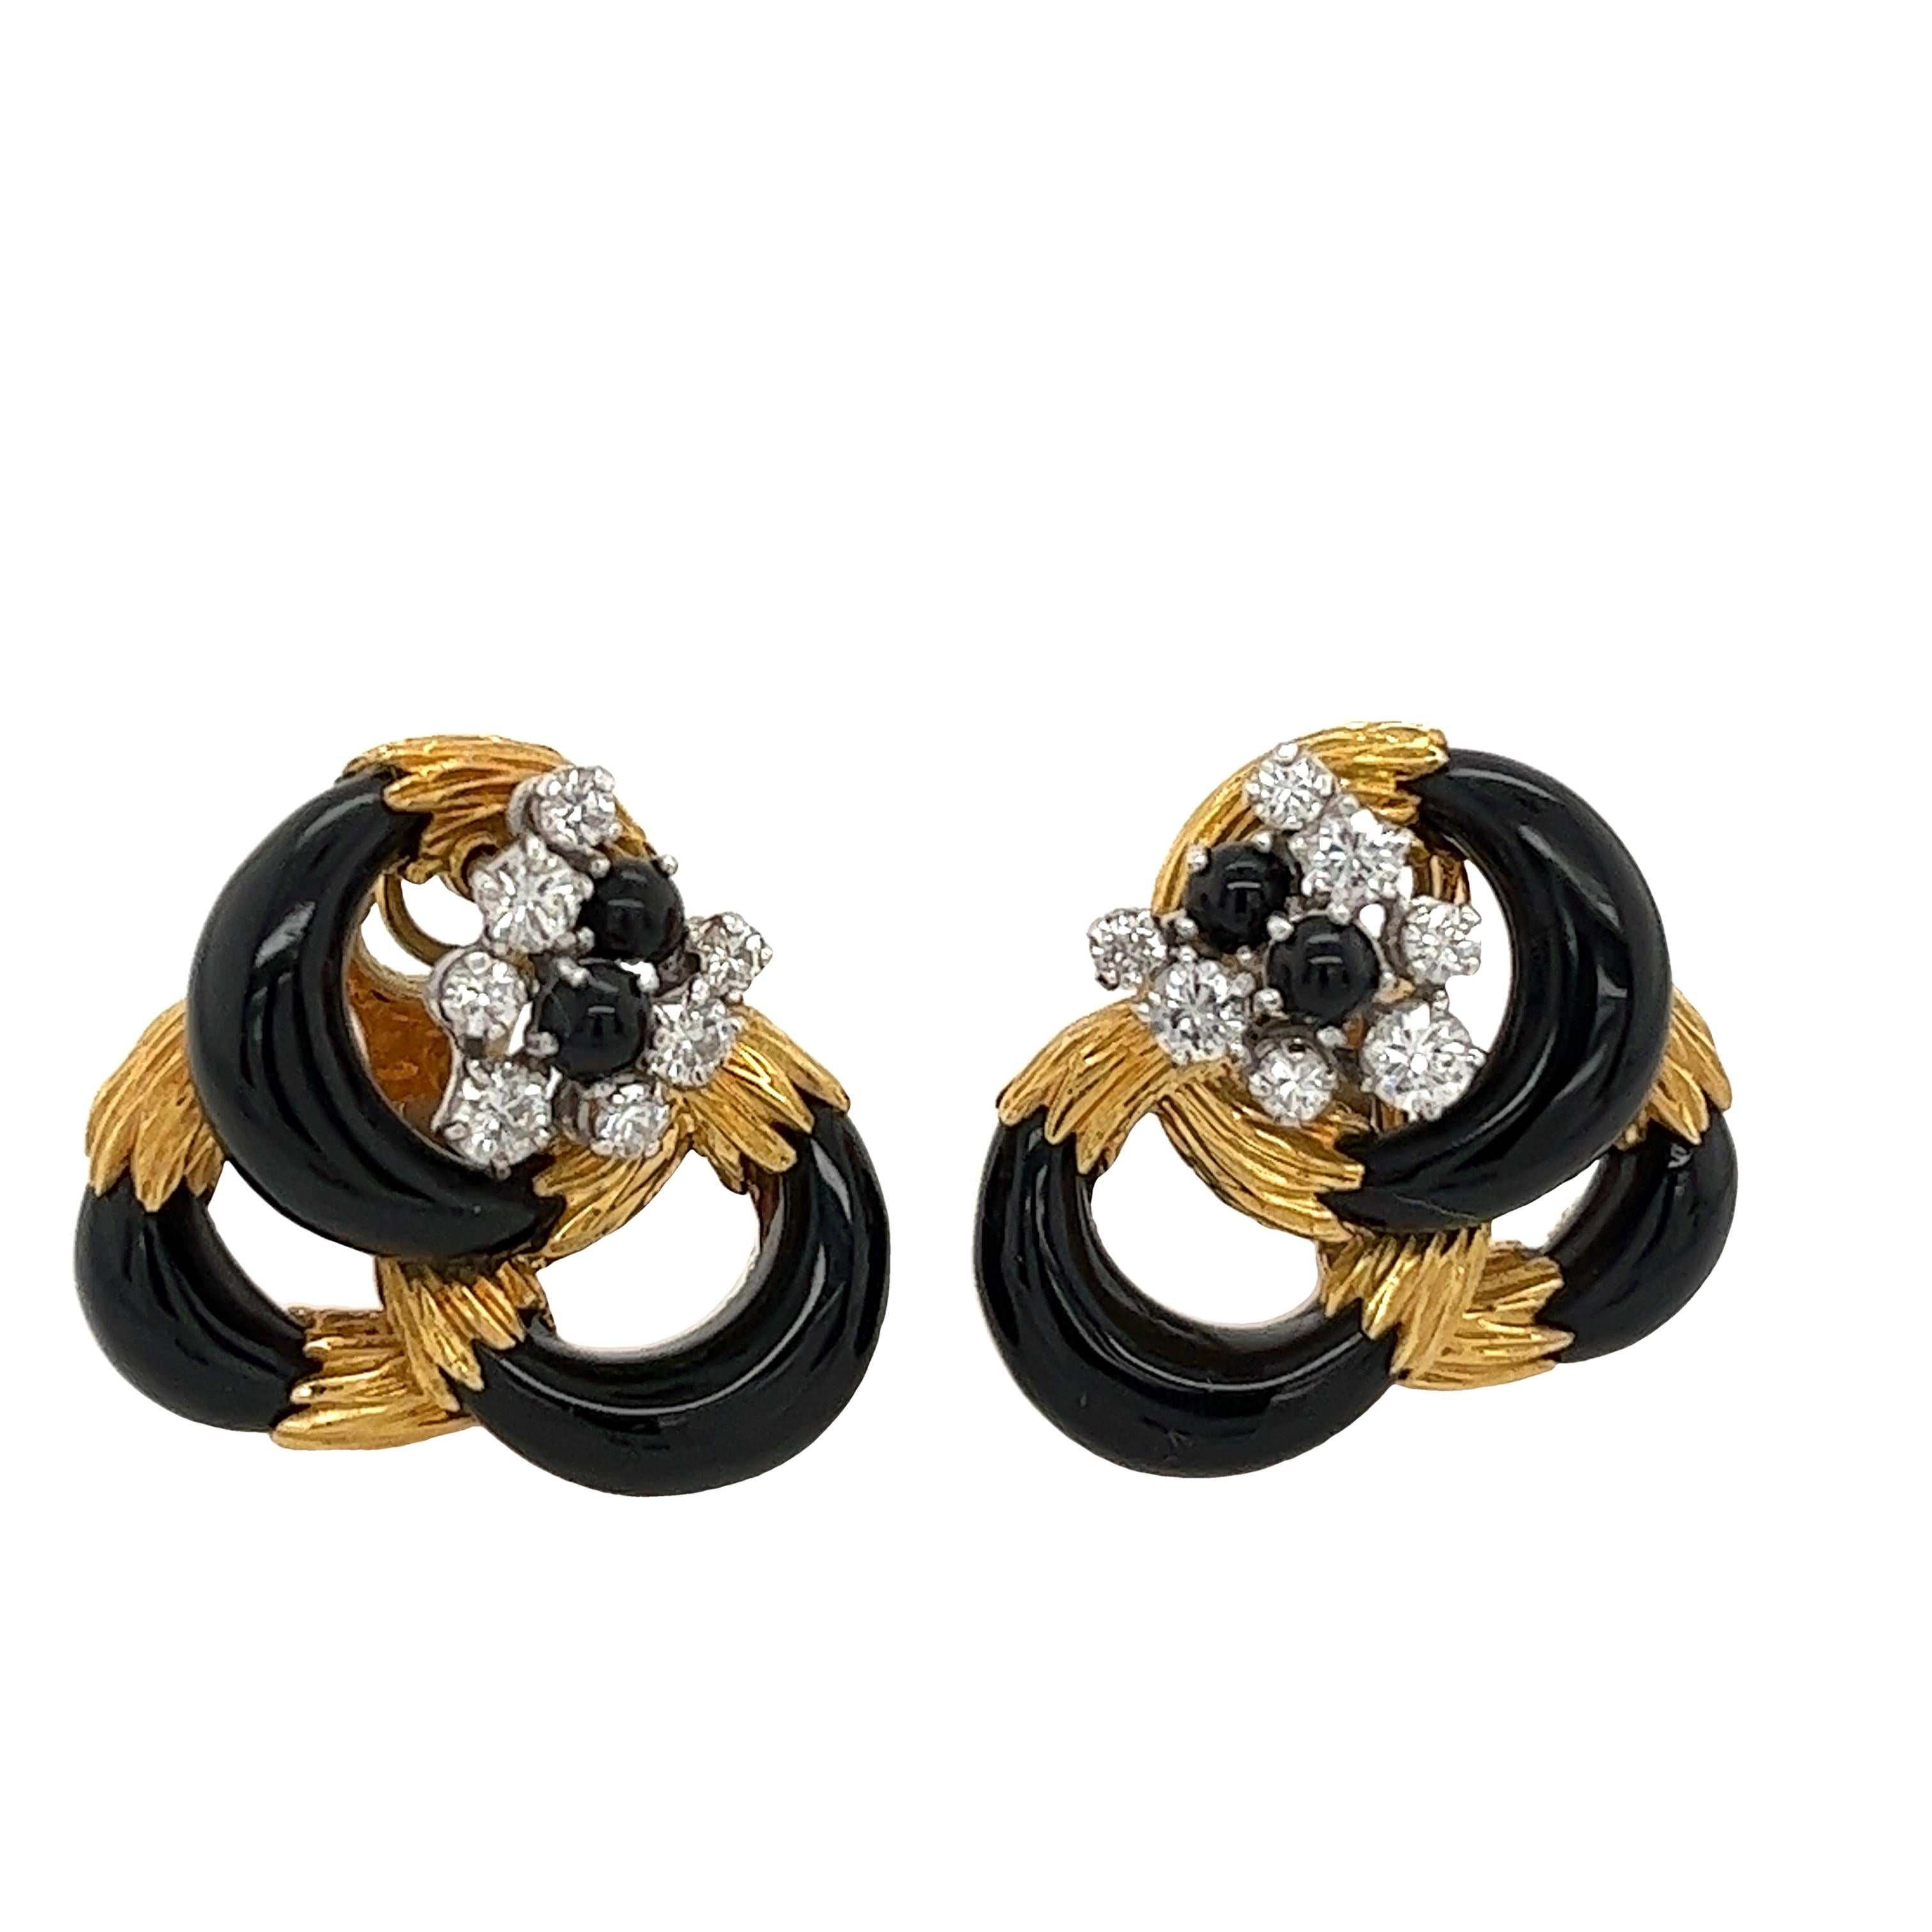 Kutchinsky Vintage Diamond Earrings Black Enamel Set In 18ct Yellow Gold For Sale 5